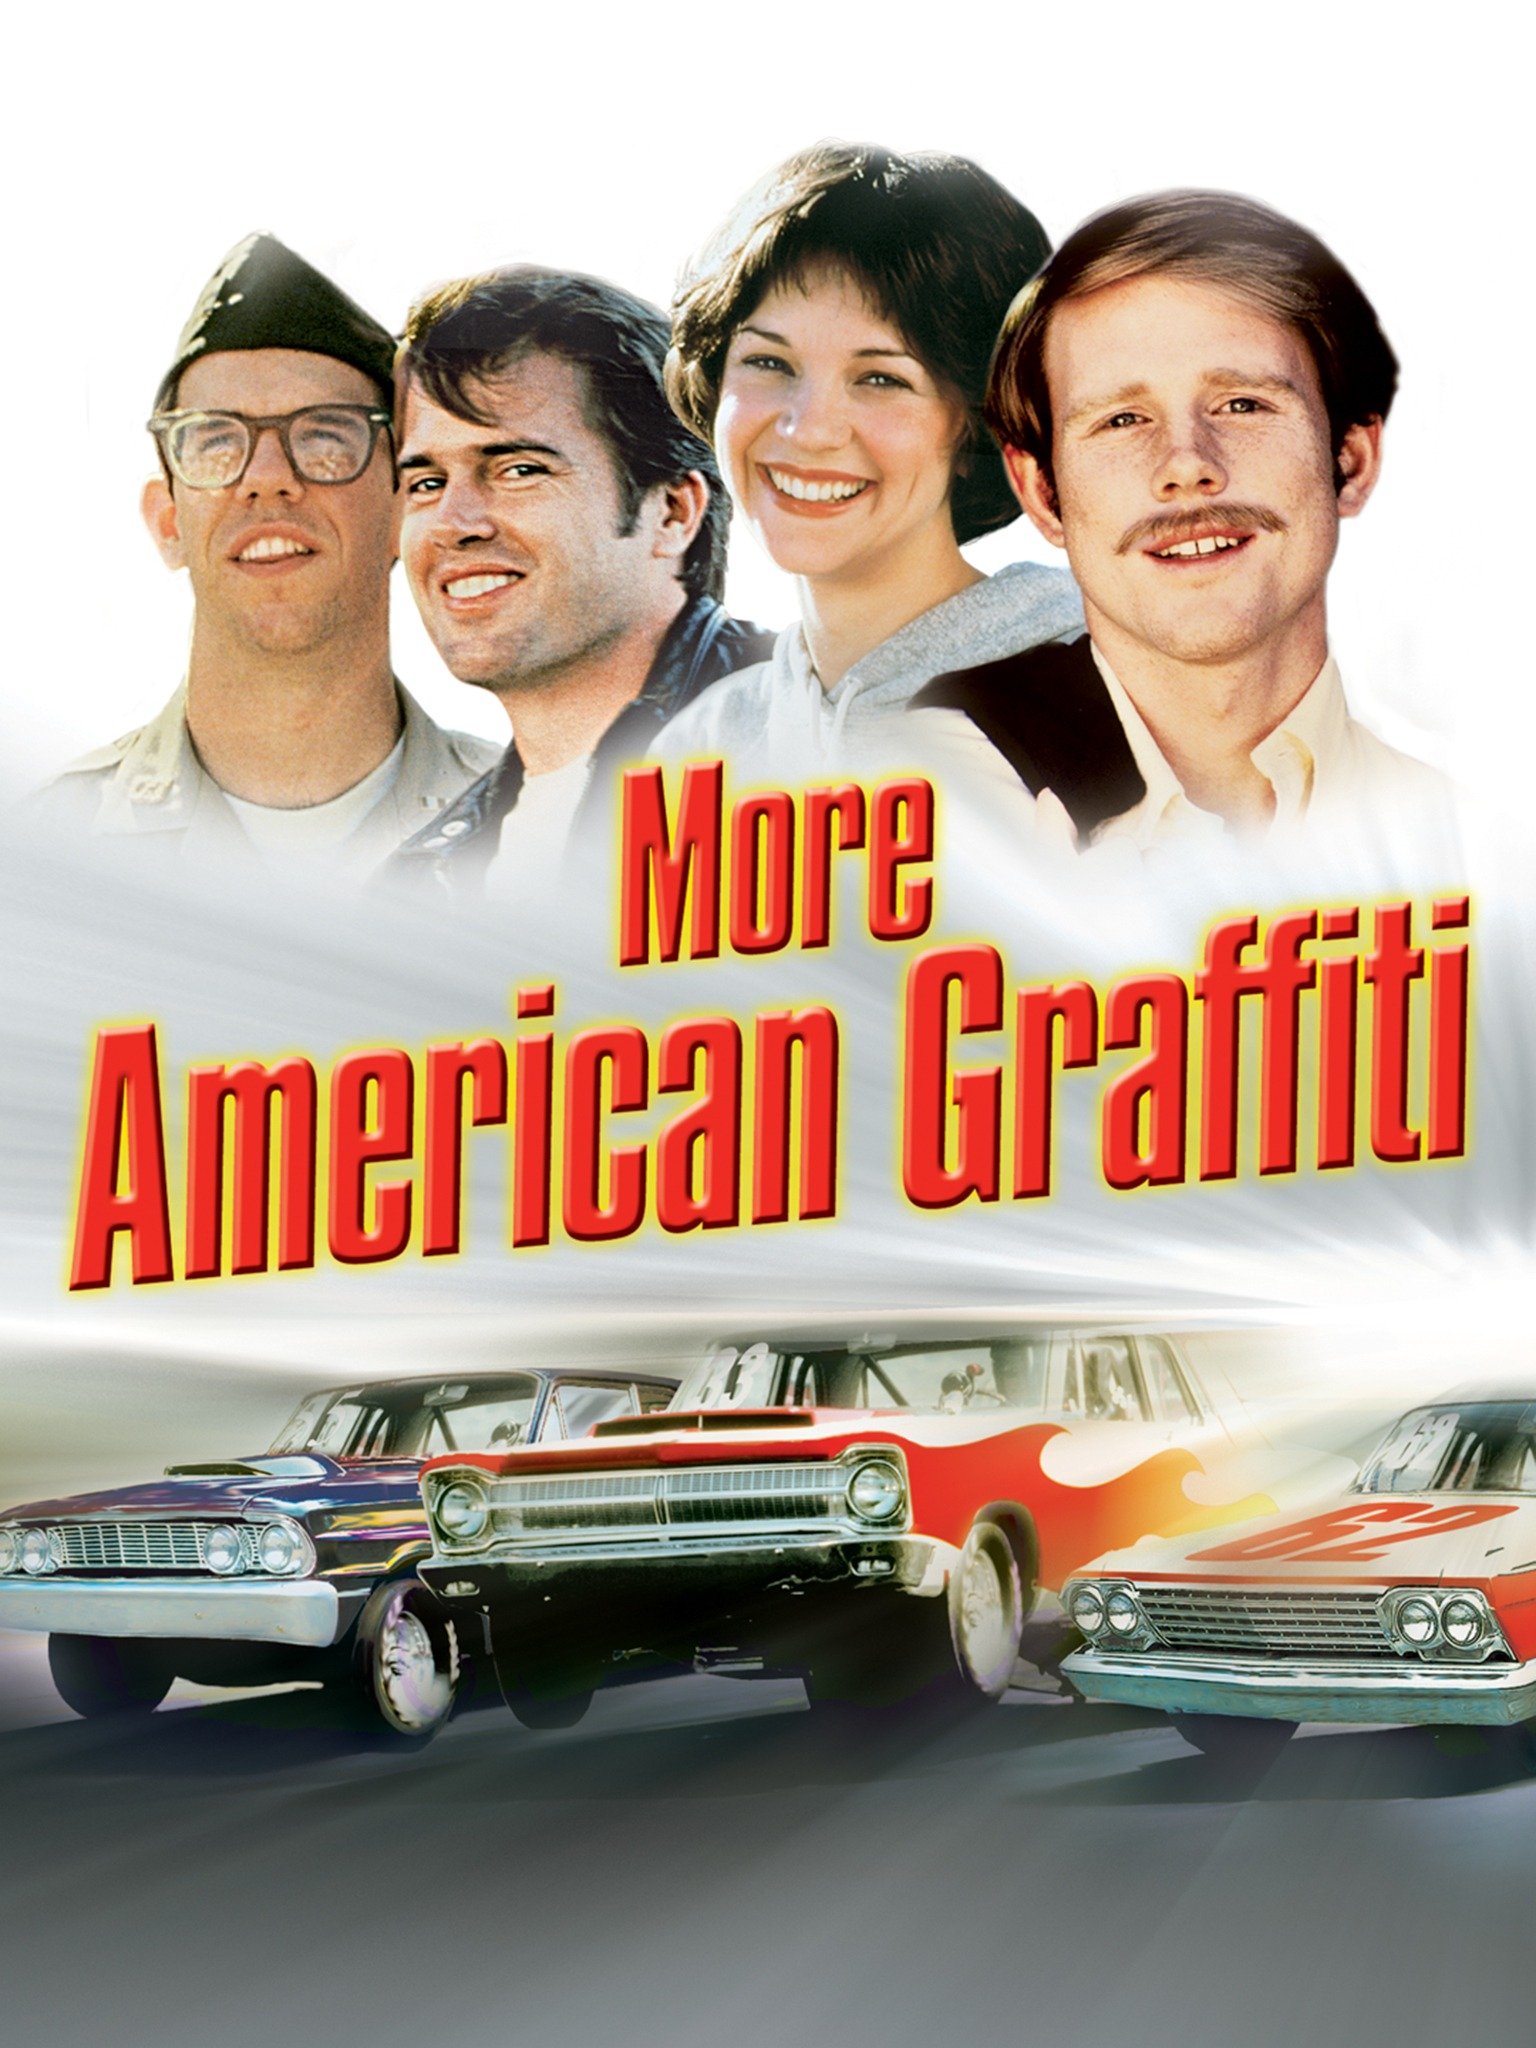 american graffiti movie review